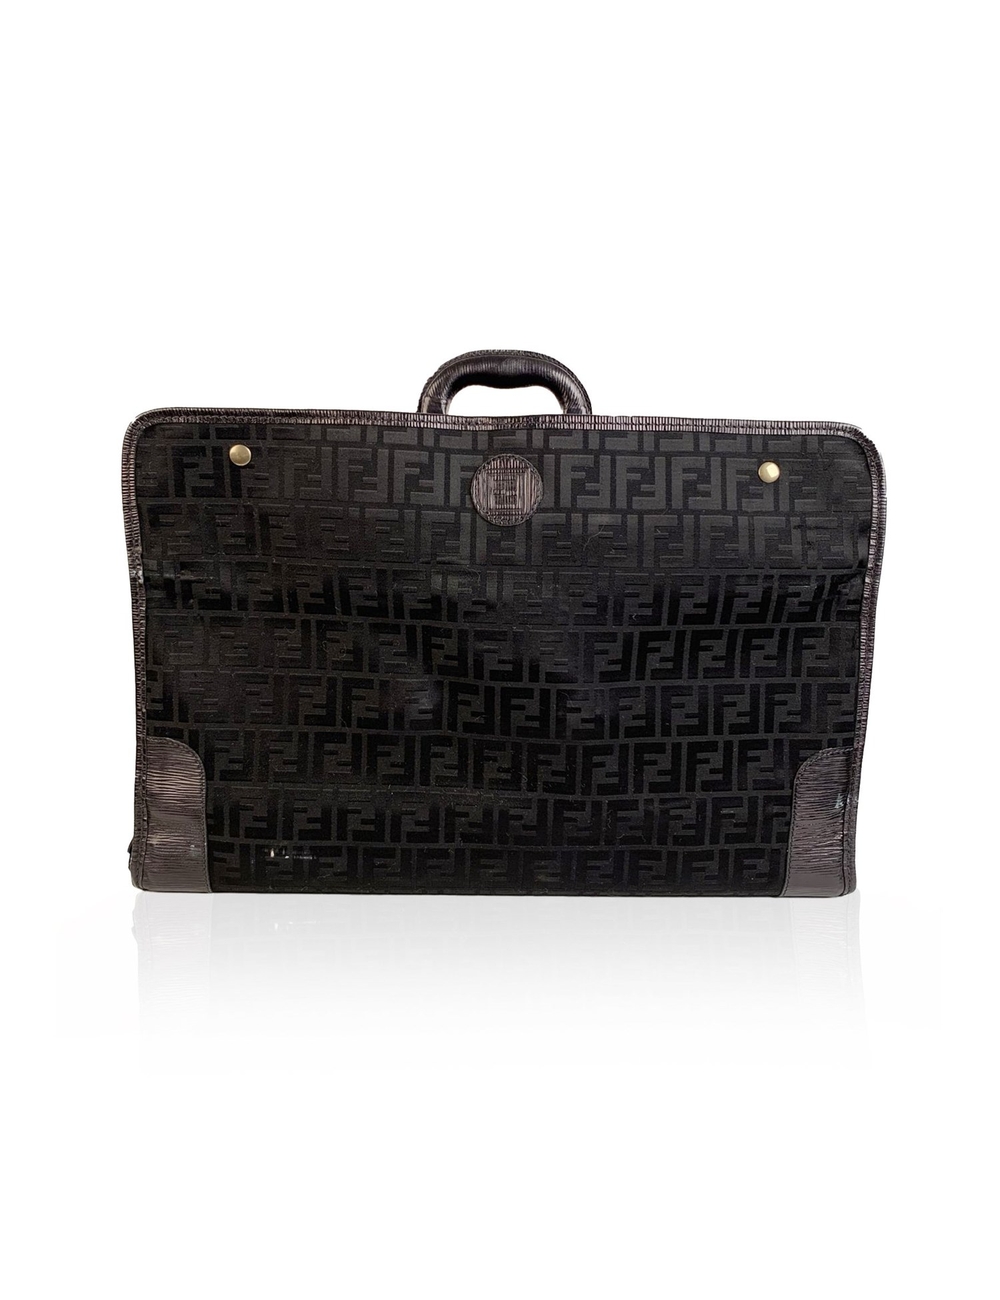 Practical Vintage foldable suitcase travel bag by Fendi in black monogram canvas with black genuine 